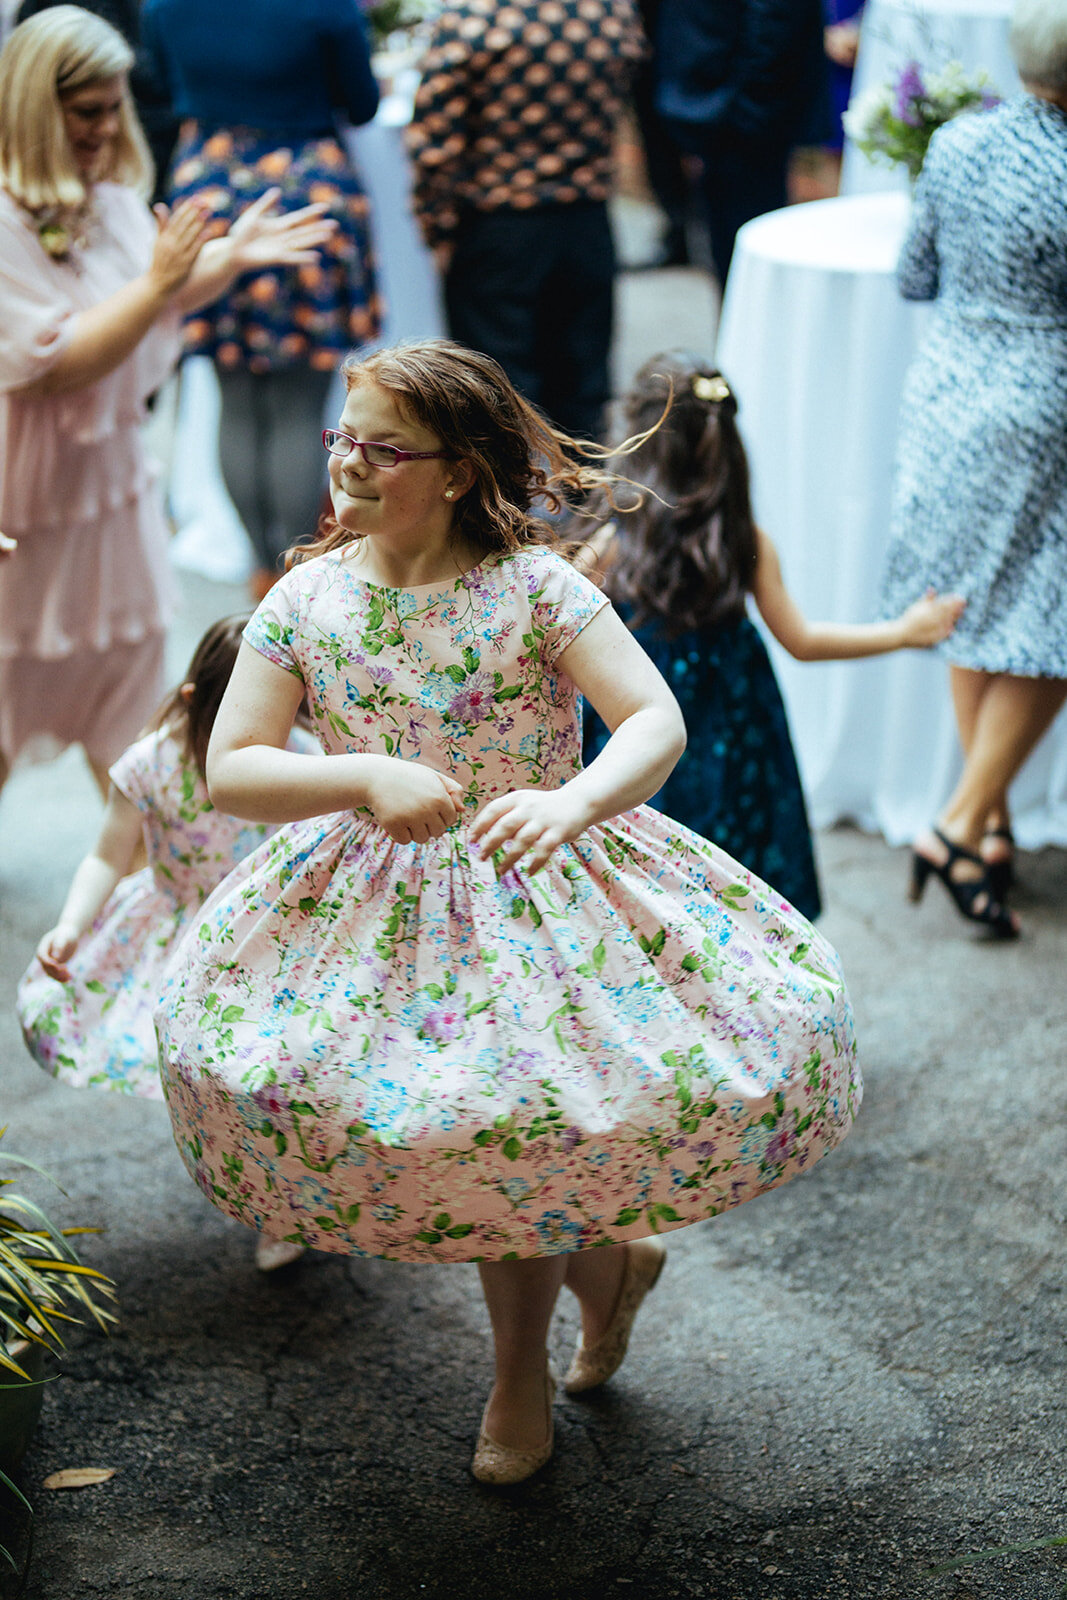 Little girls dancing in matching dresses at Atlanta wedding Guests dancing at backyard reception in Atlanta GA Shawnee Custalow Photographer